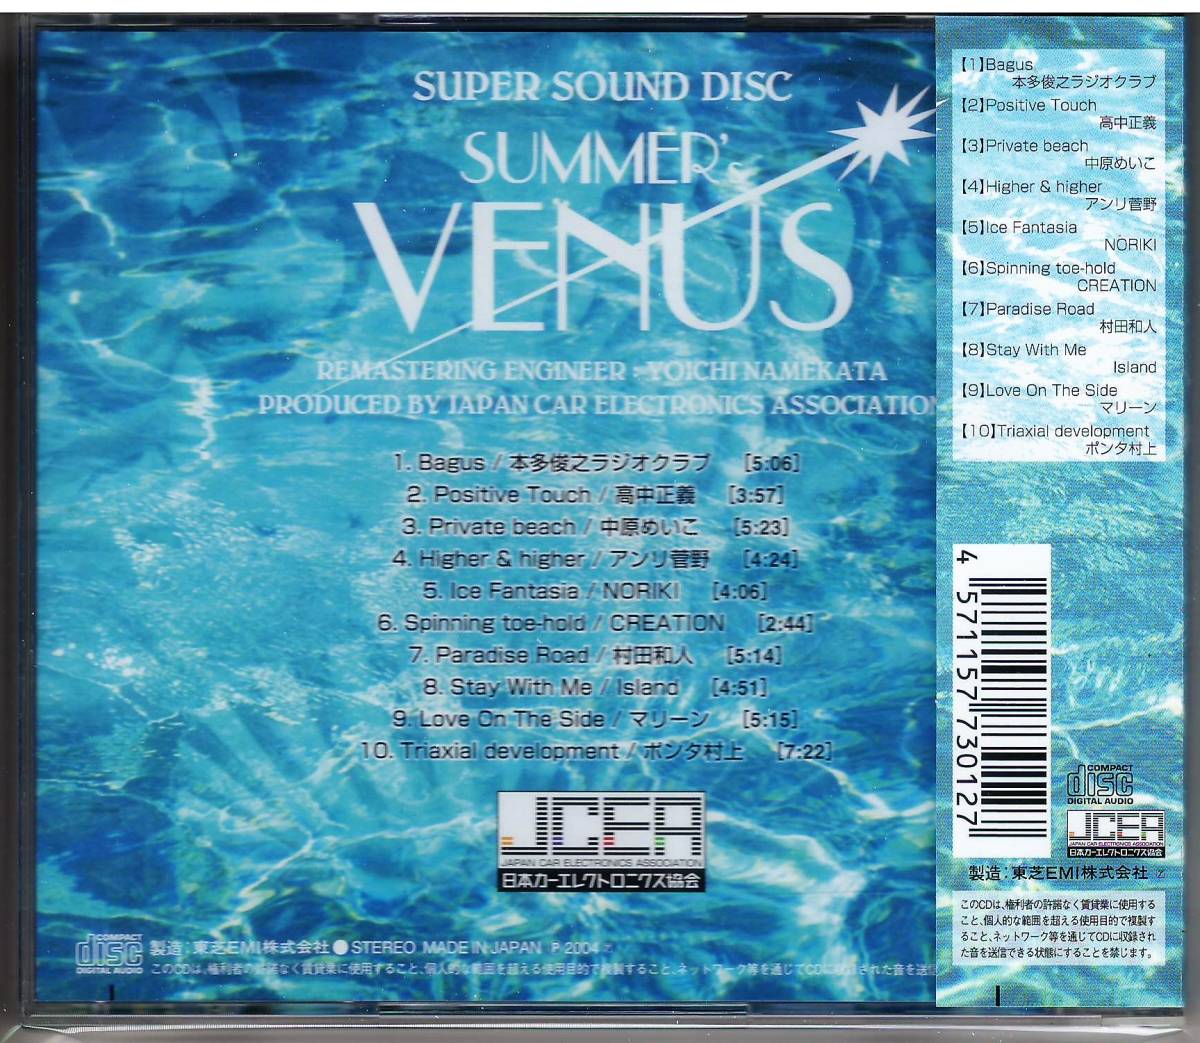 JCEAスーパーサウンドディスク「SUMMER's VENUS」高音質録音CD 送料込 行方洋一 日本カーエレクトロニクス協会 カーオーディオ_画像2